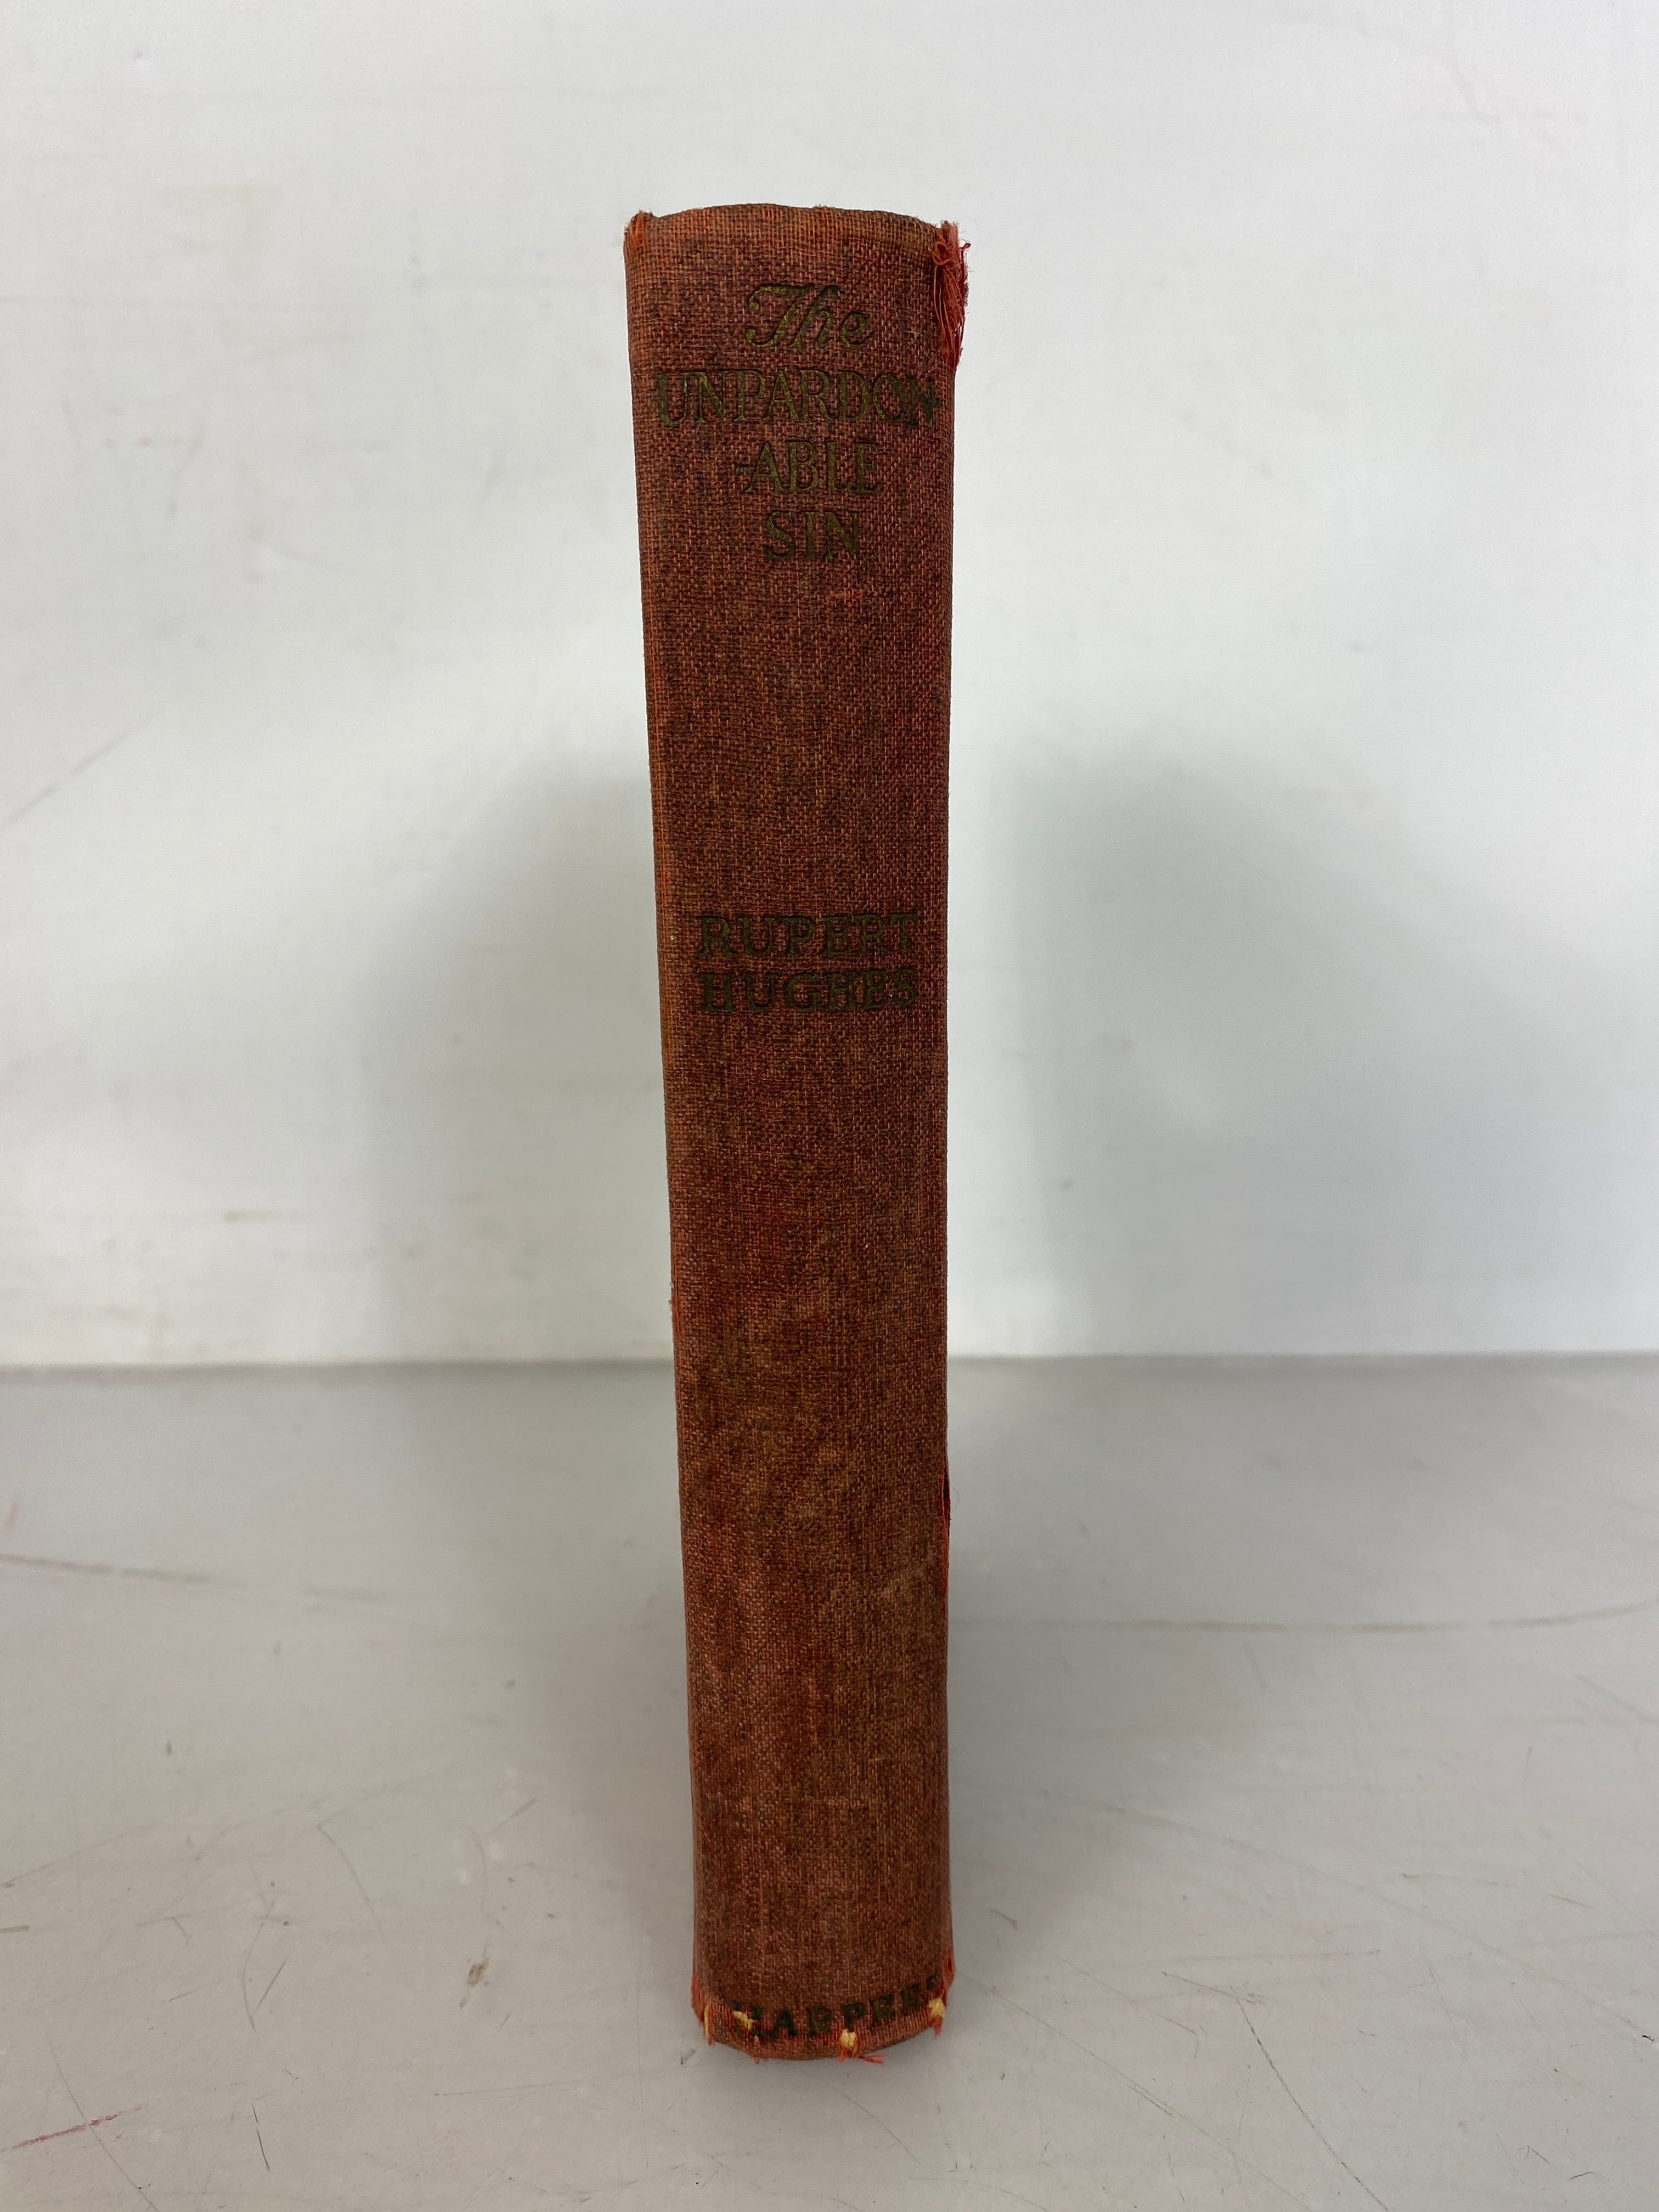 The Unpardonable Sin by Rupert Hughes 1918 First Edition HC